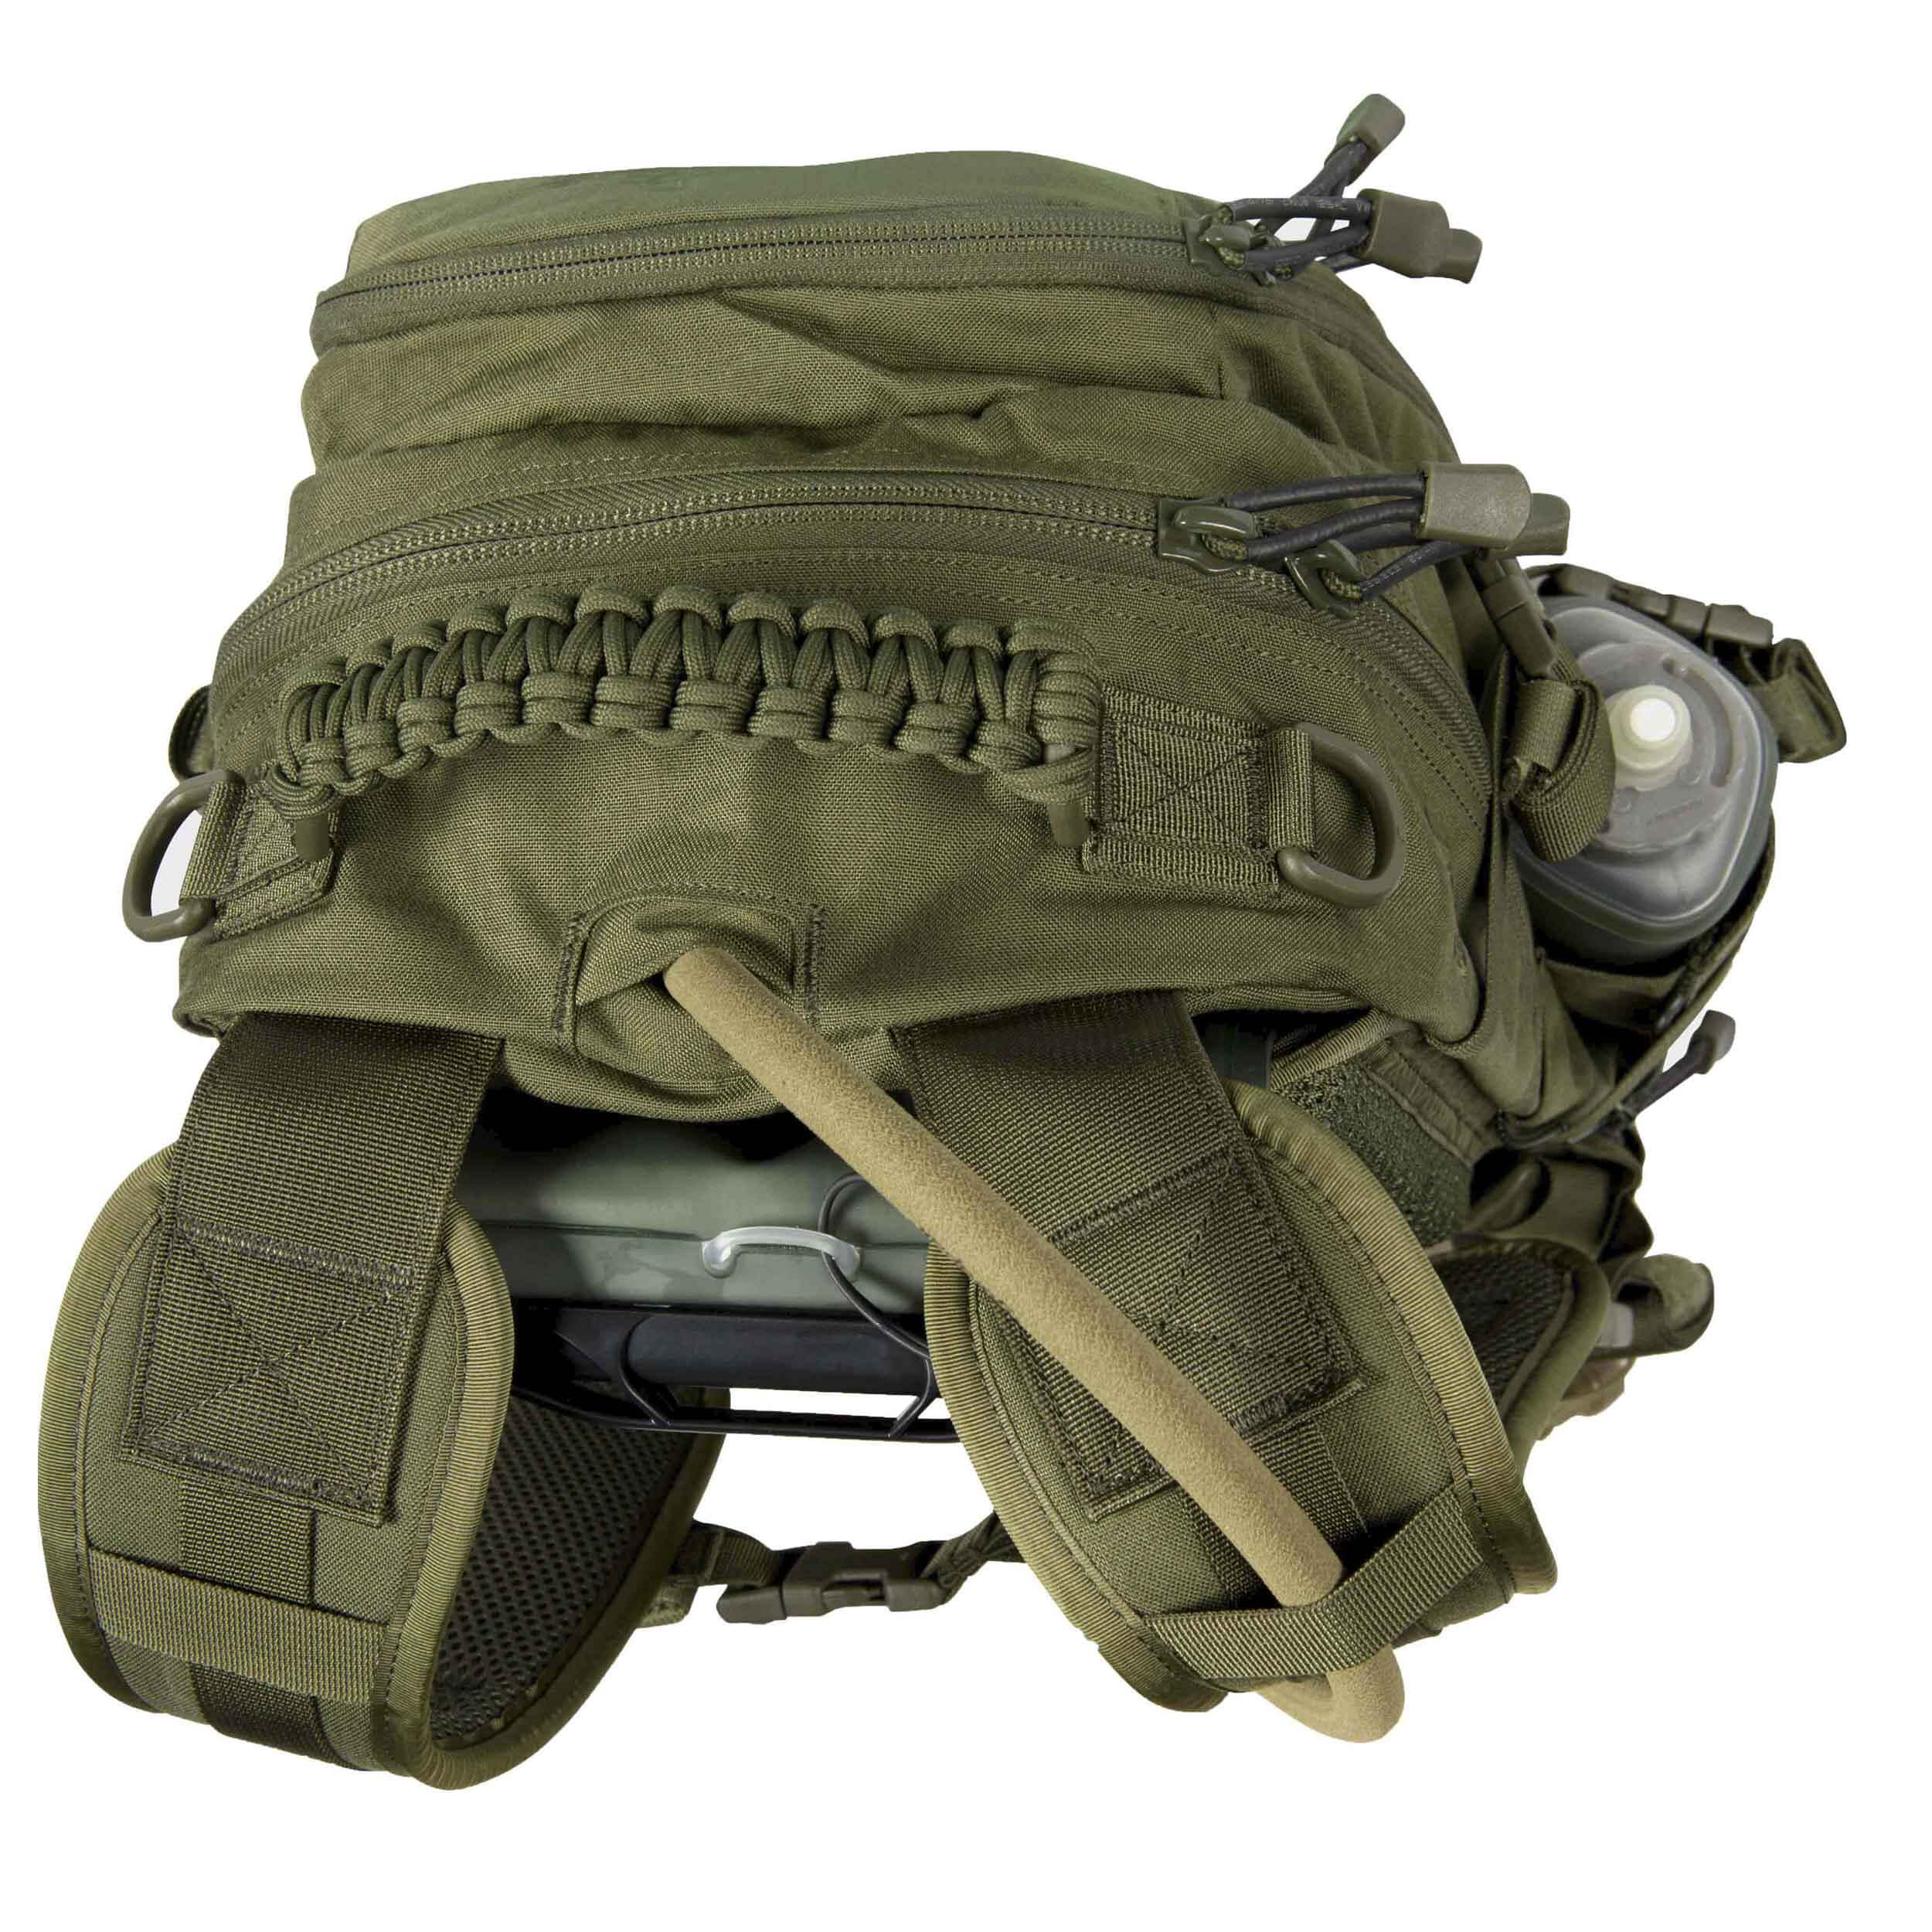 Direct Action DUST® MkII Backpack - Cordura® - PenCott Greenzone